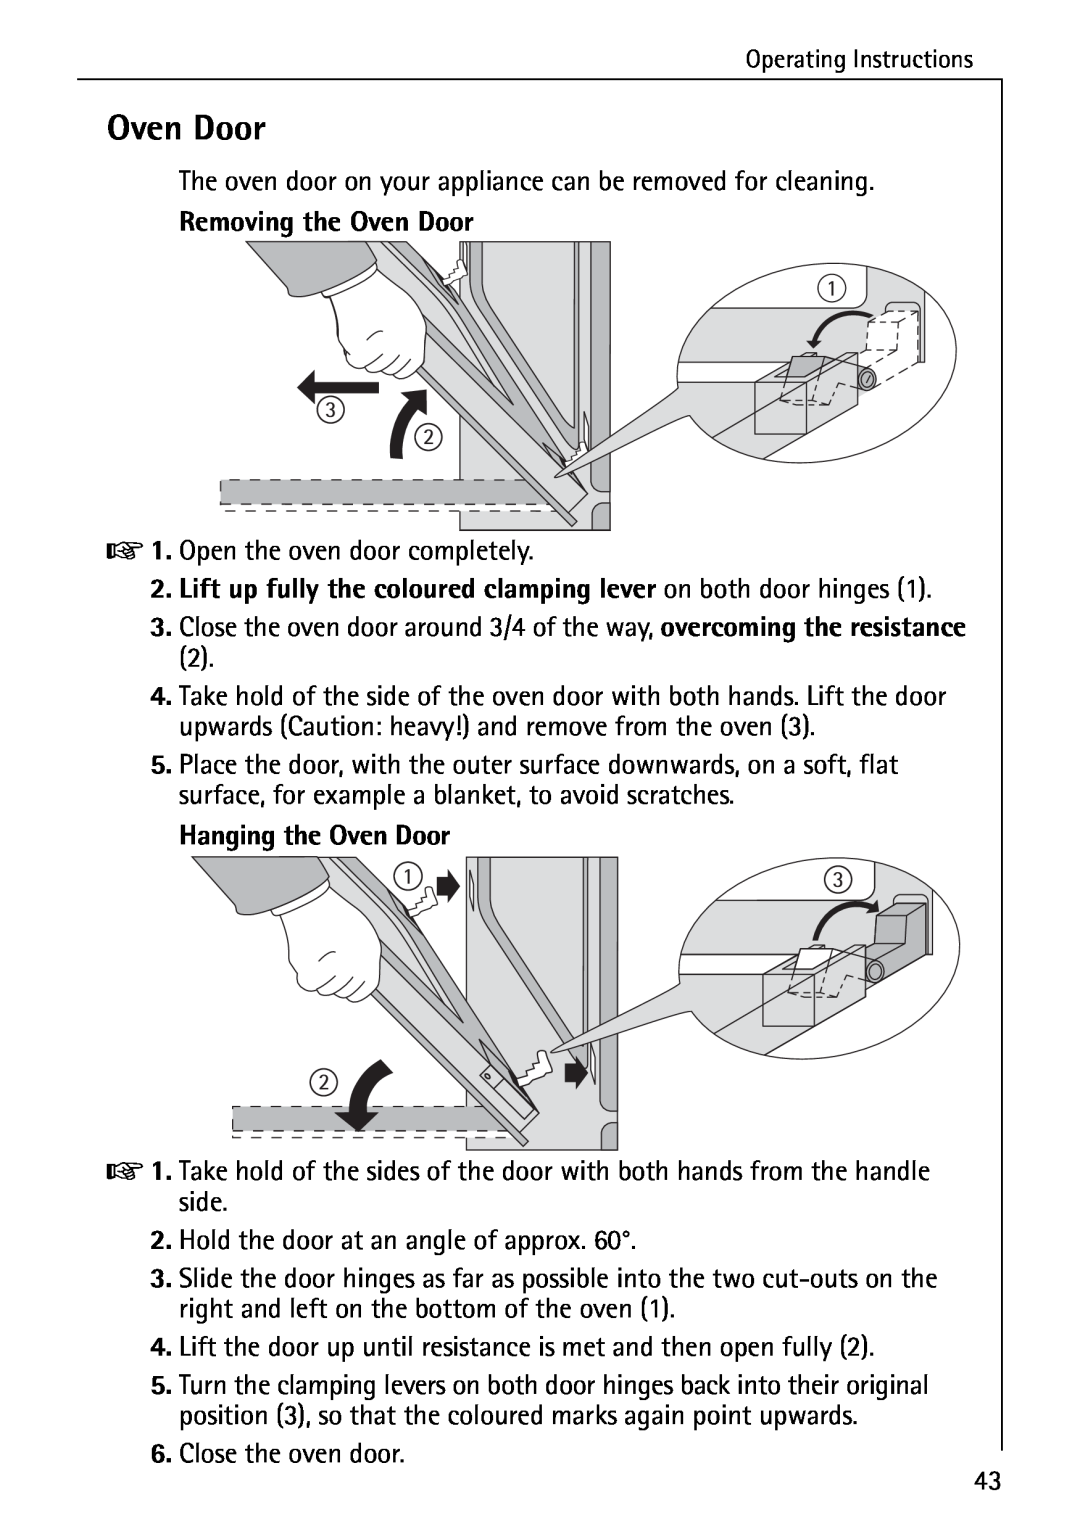 AEG B 4100 operating instructions Removing the Oven Door, Hanging the Oven Door 